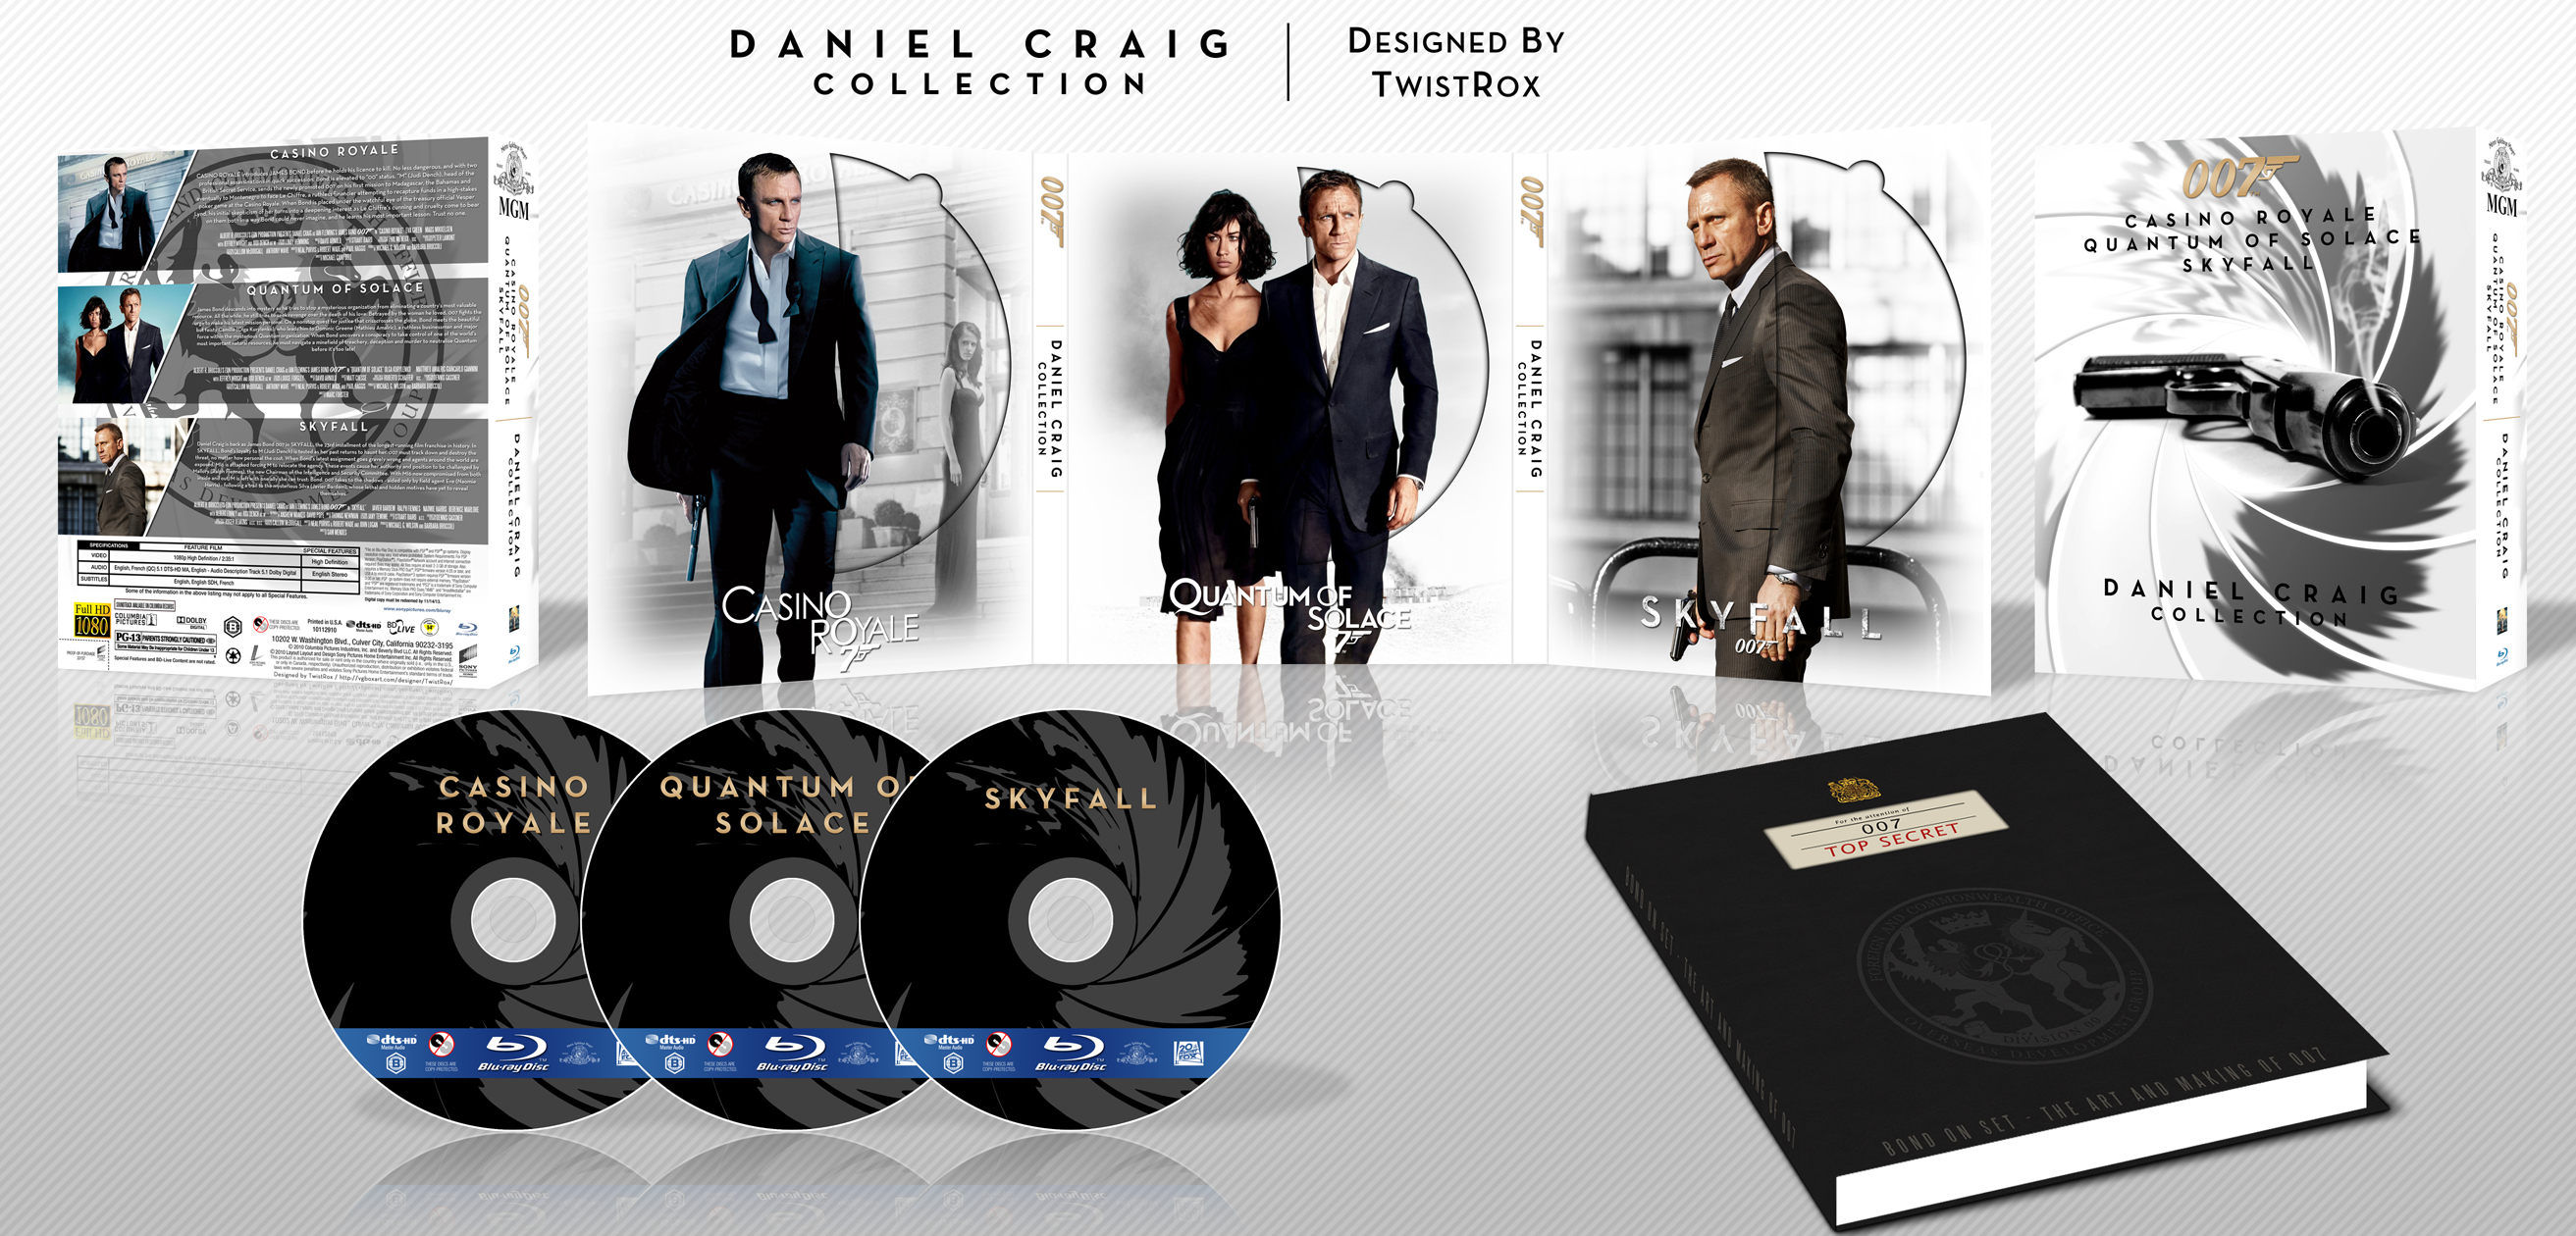 007: Daniel Craig Collection box cover